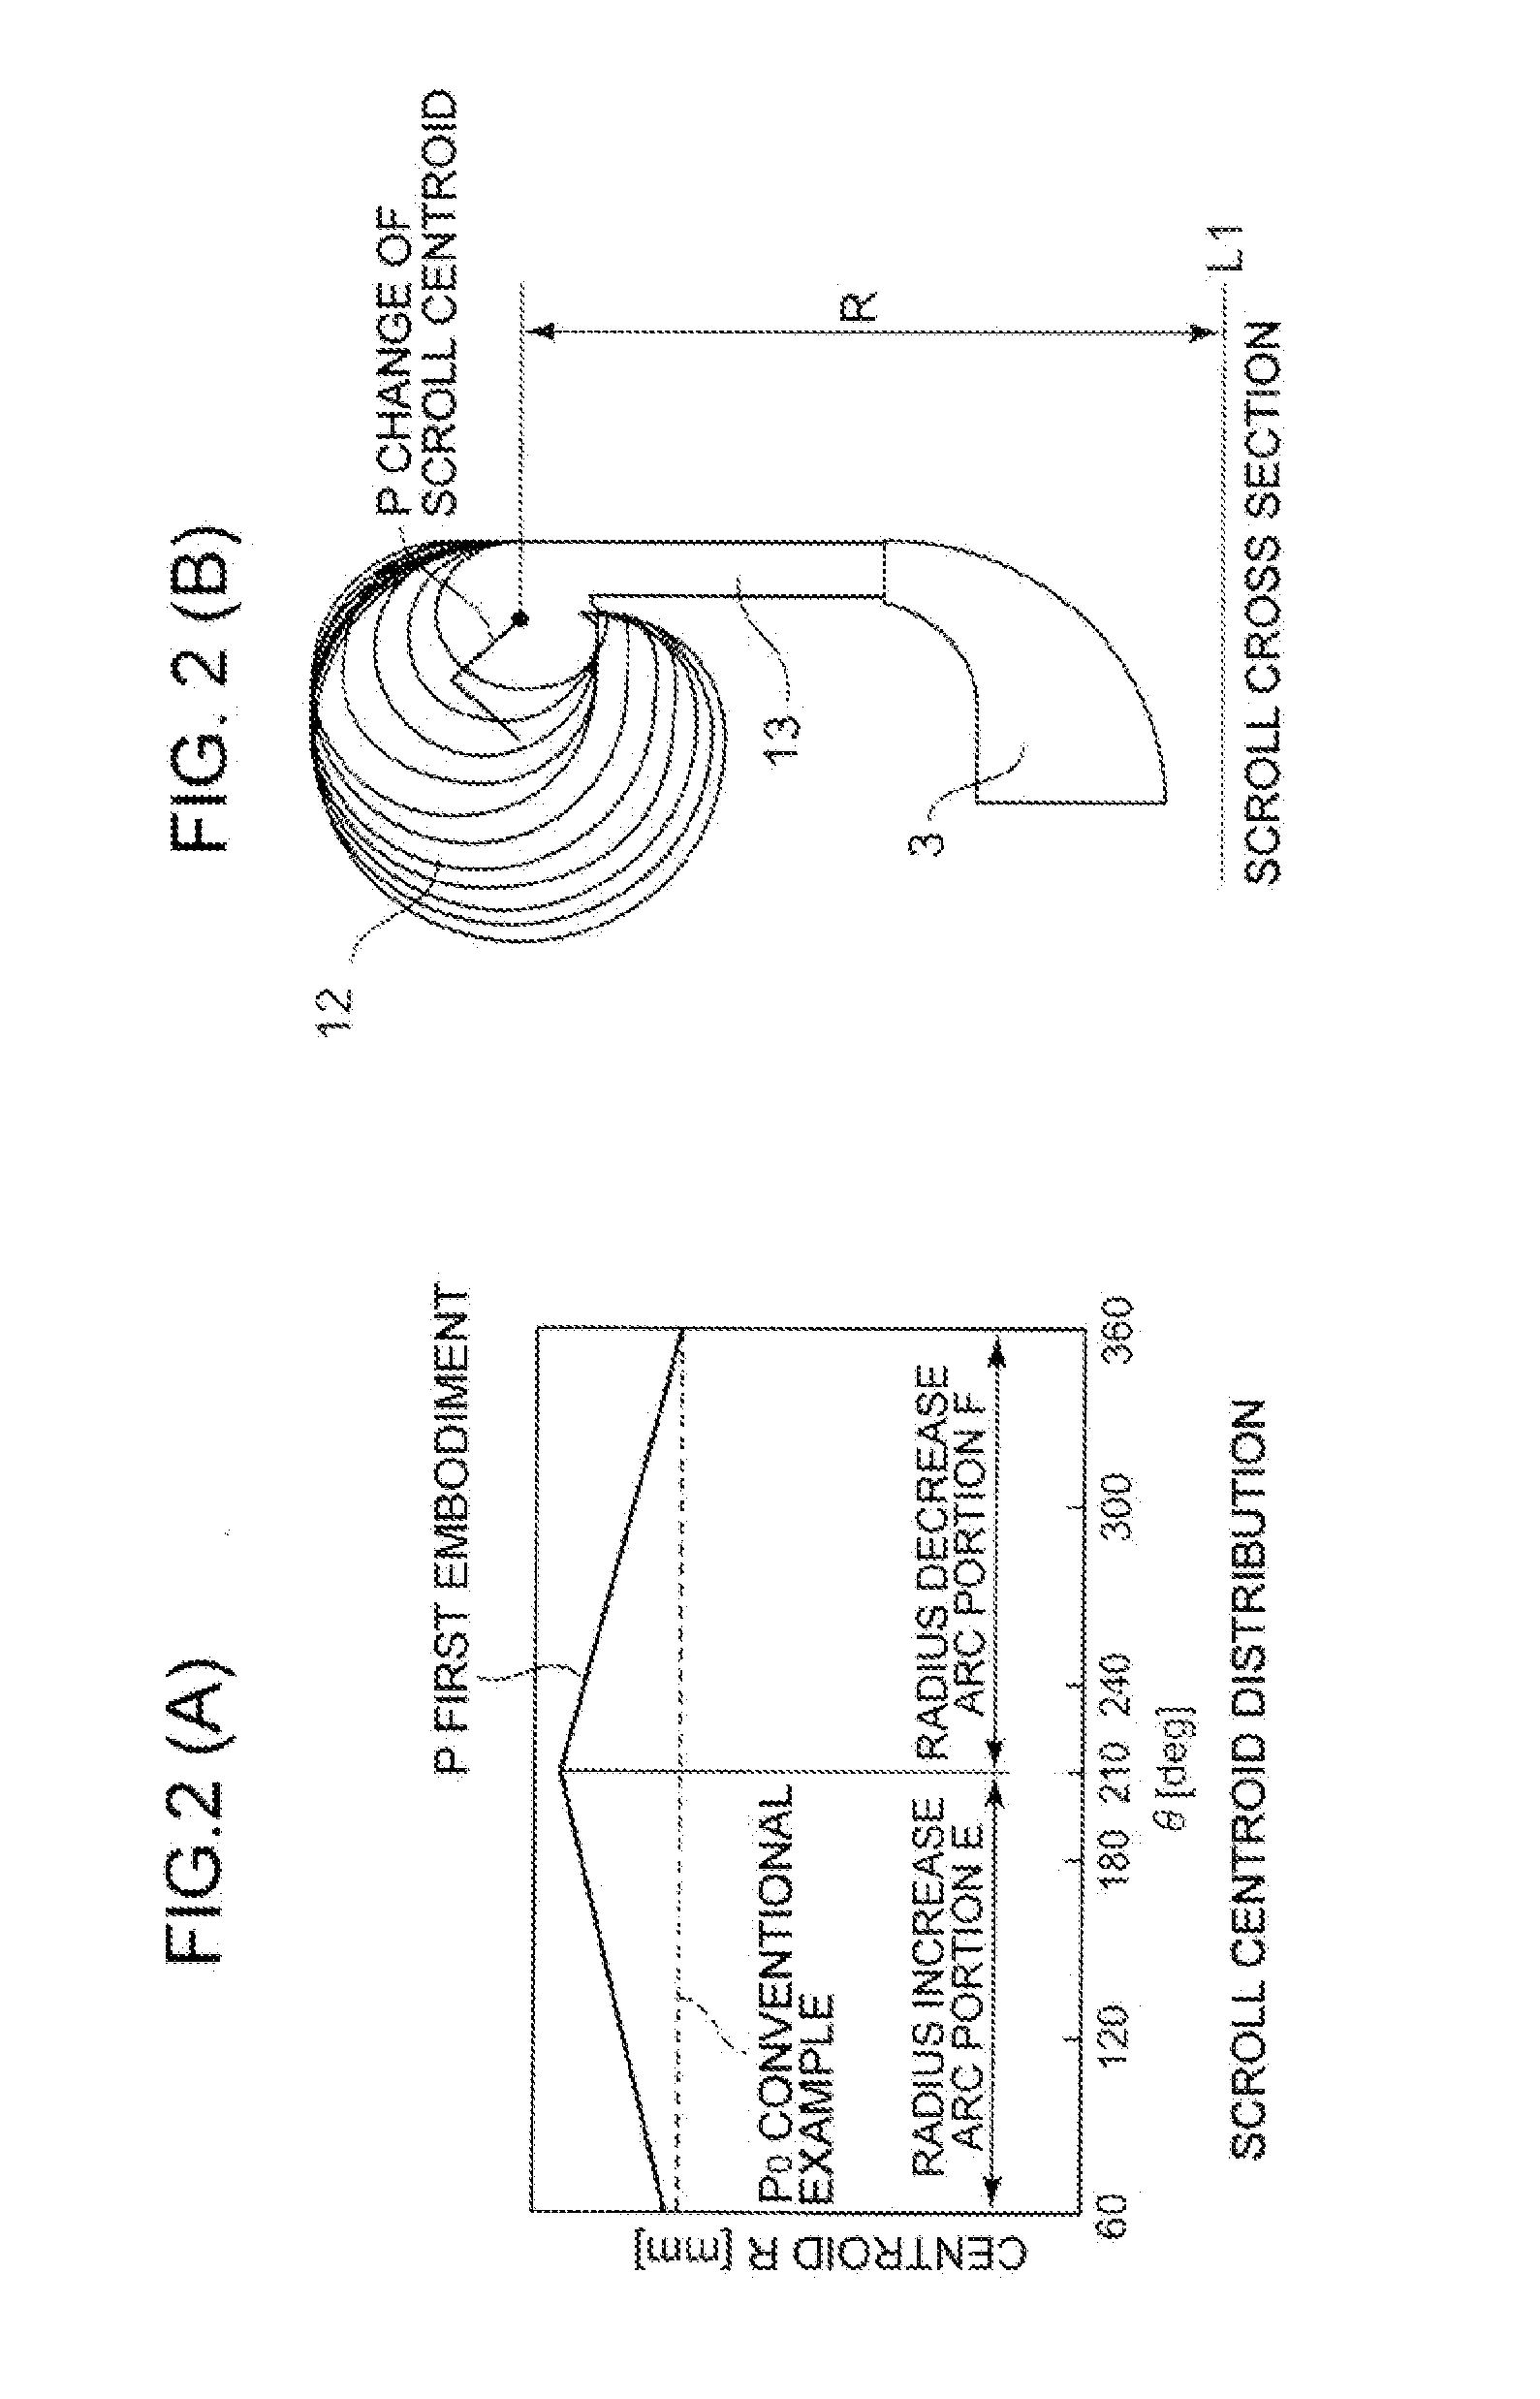 Scroll structure of centrifugal compressor